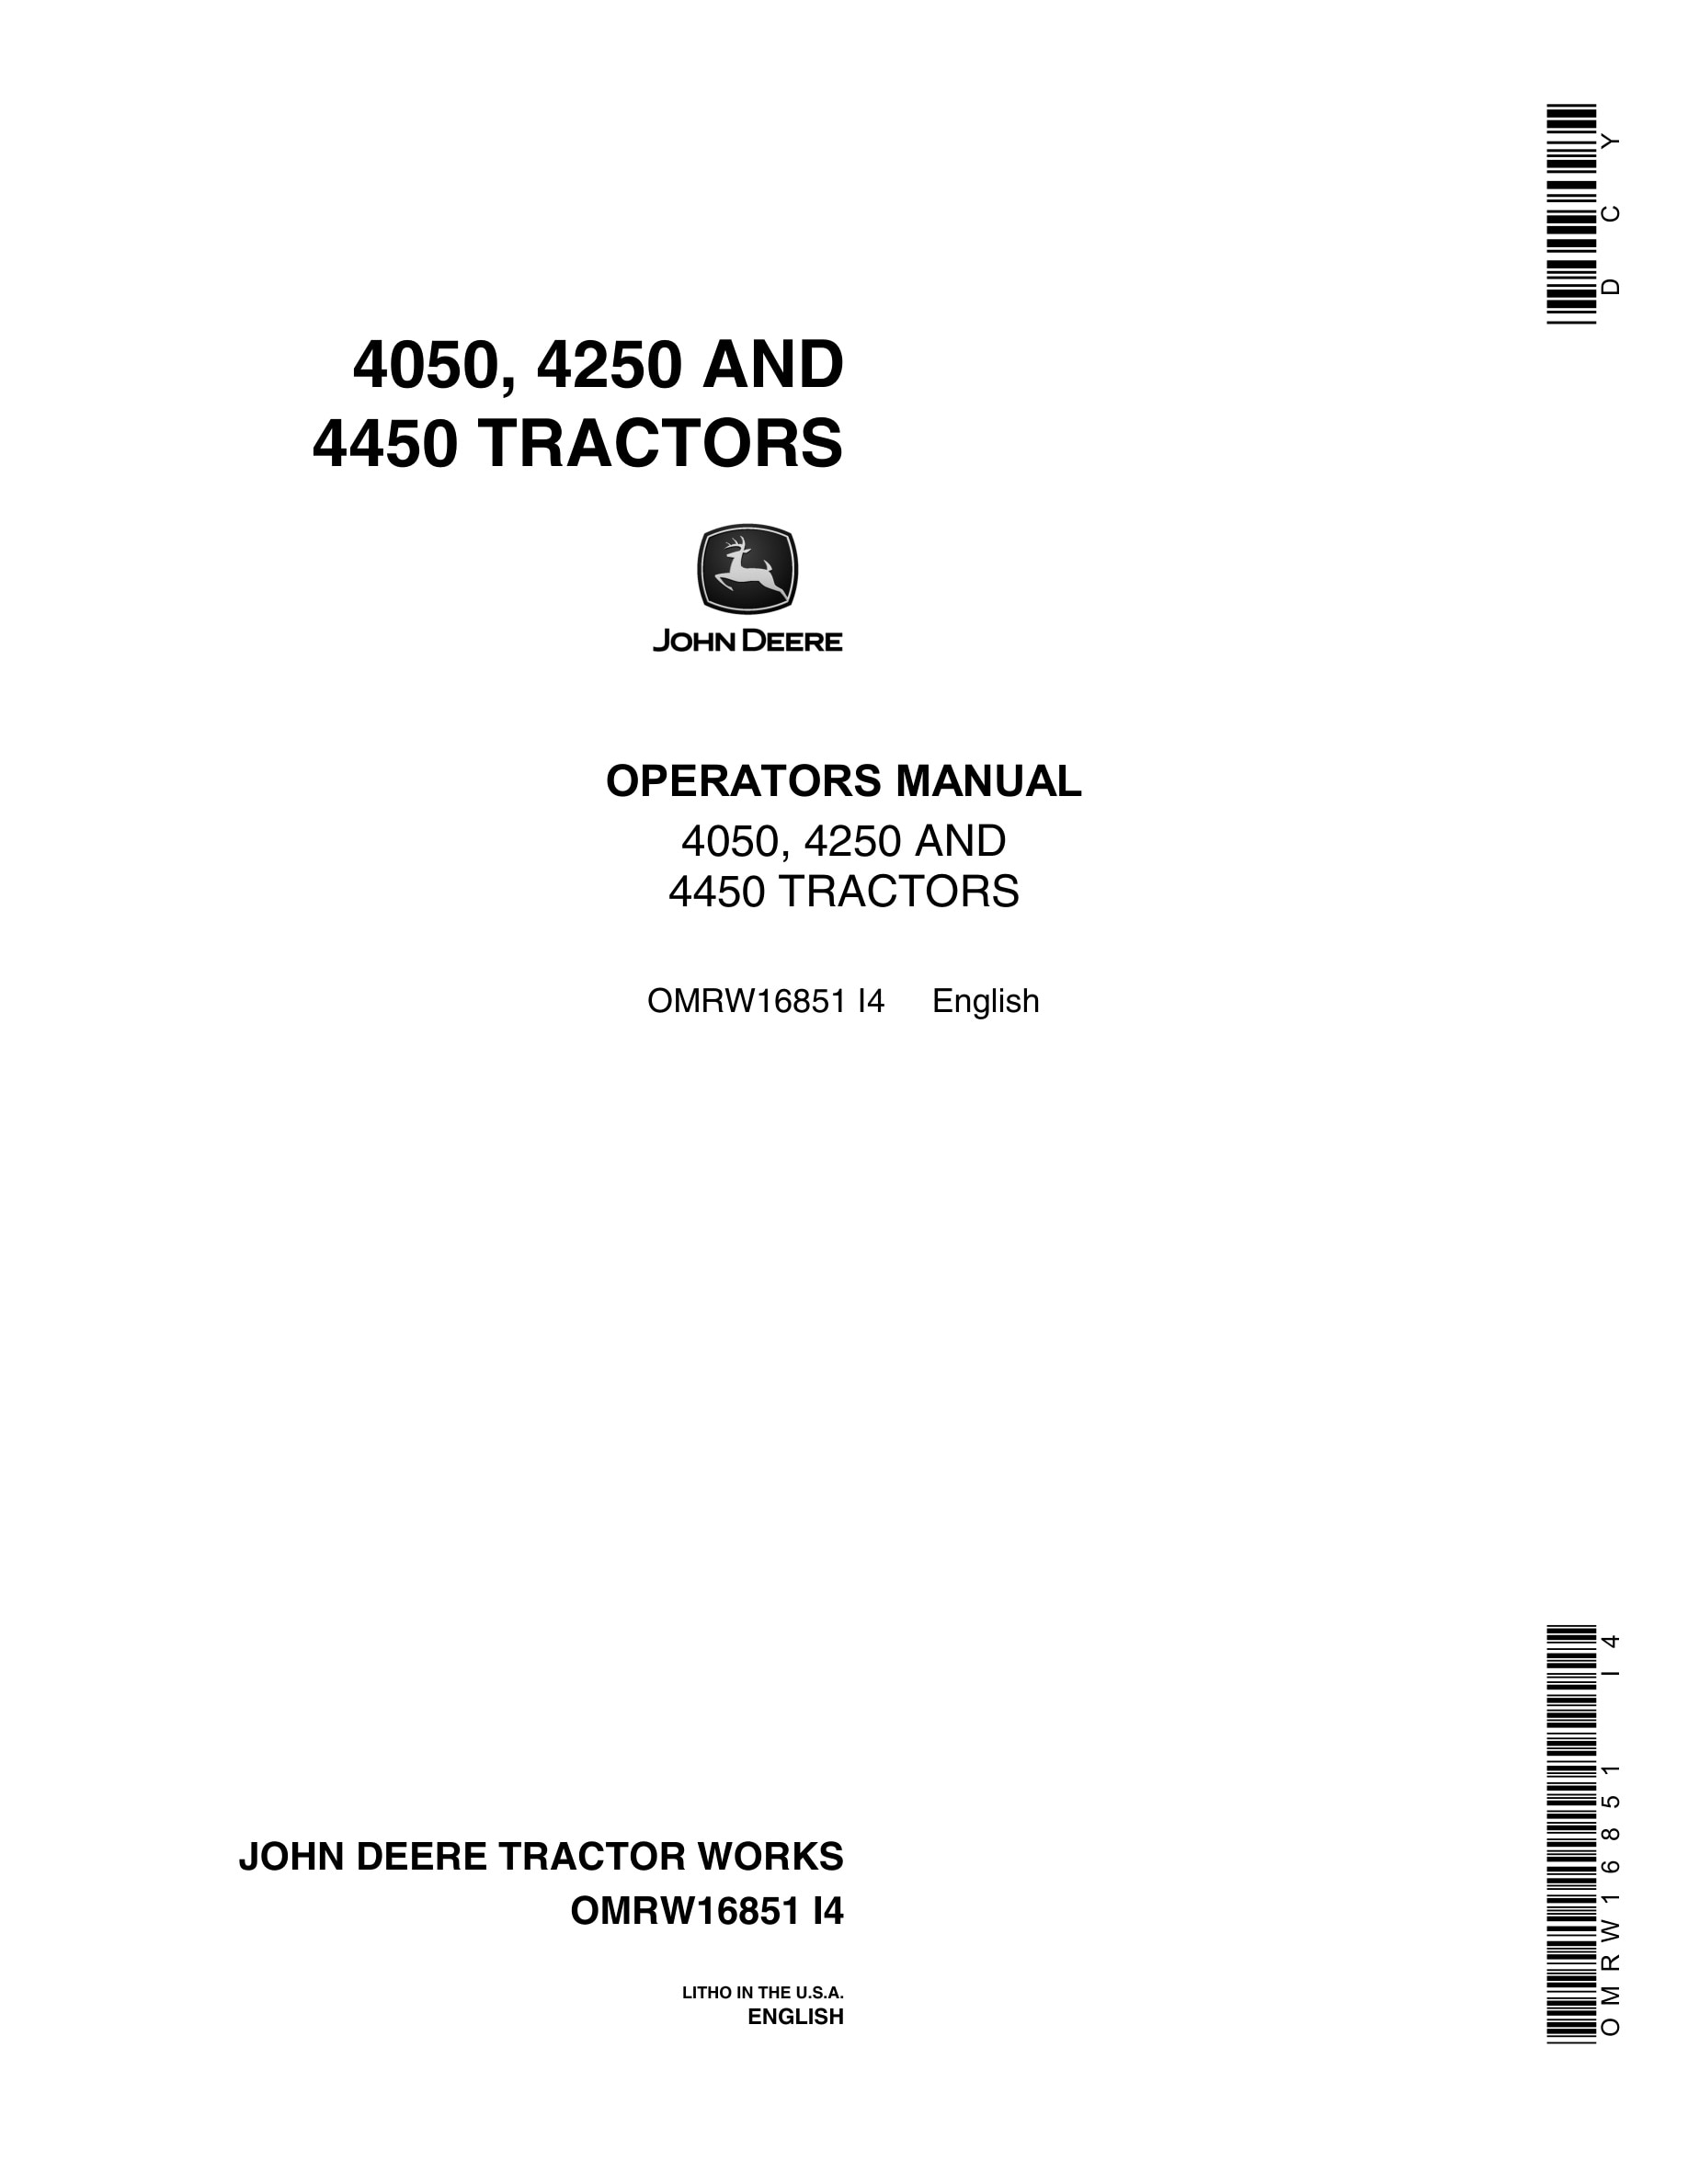 John Deere 4050, 4250 AND 4450 Tractor Operator Manual OMRW16851-1